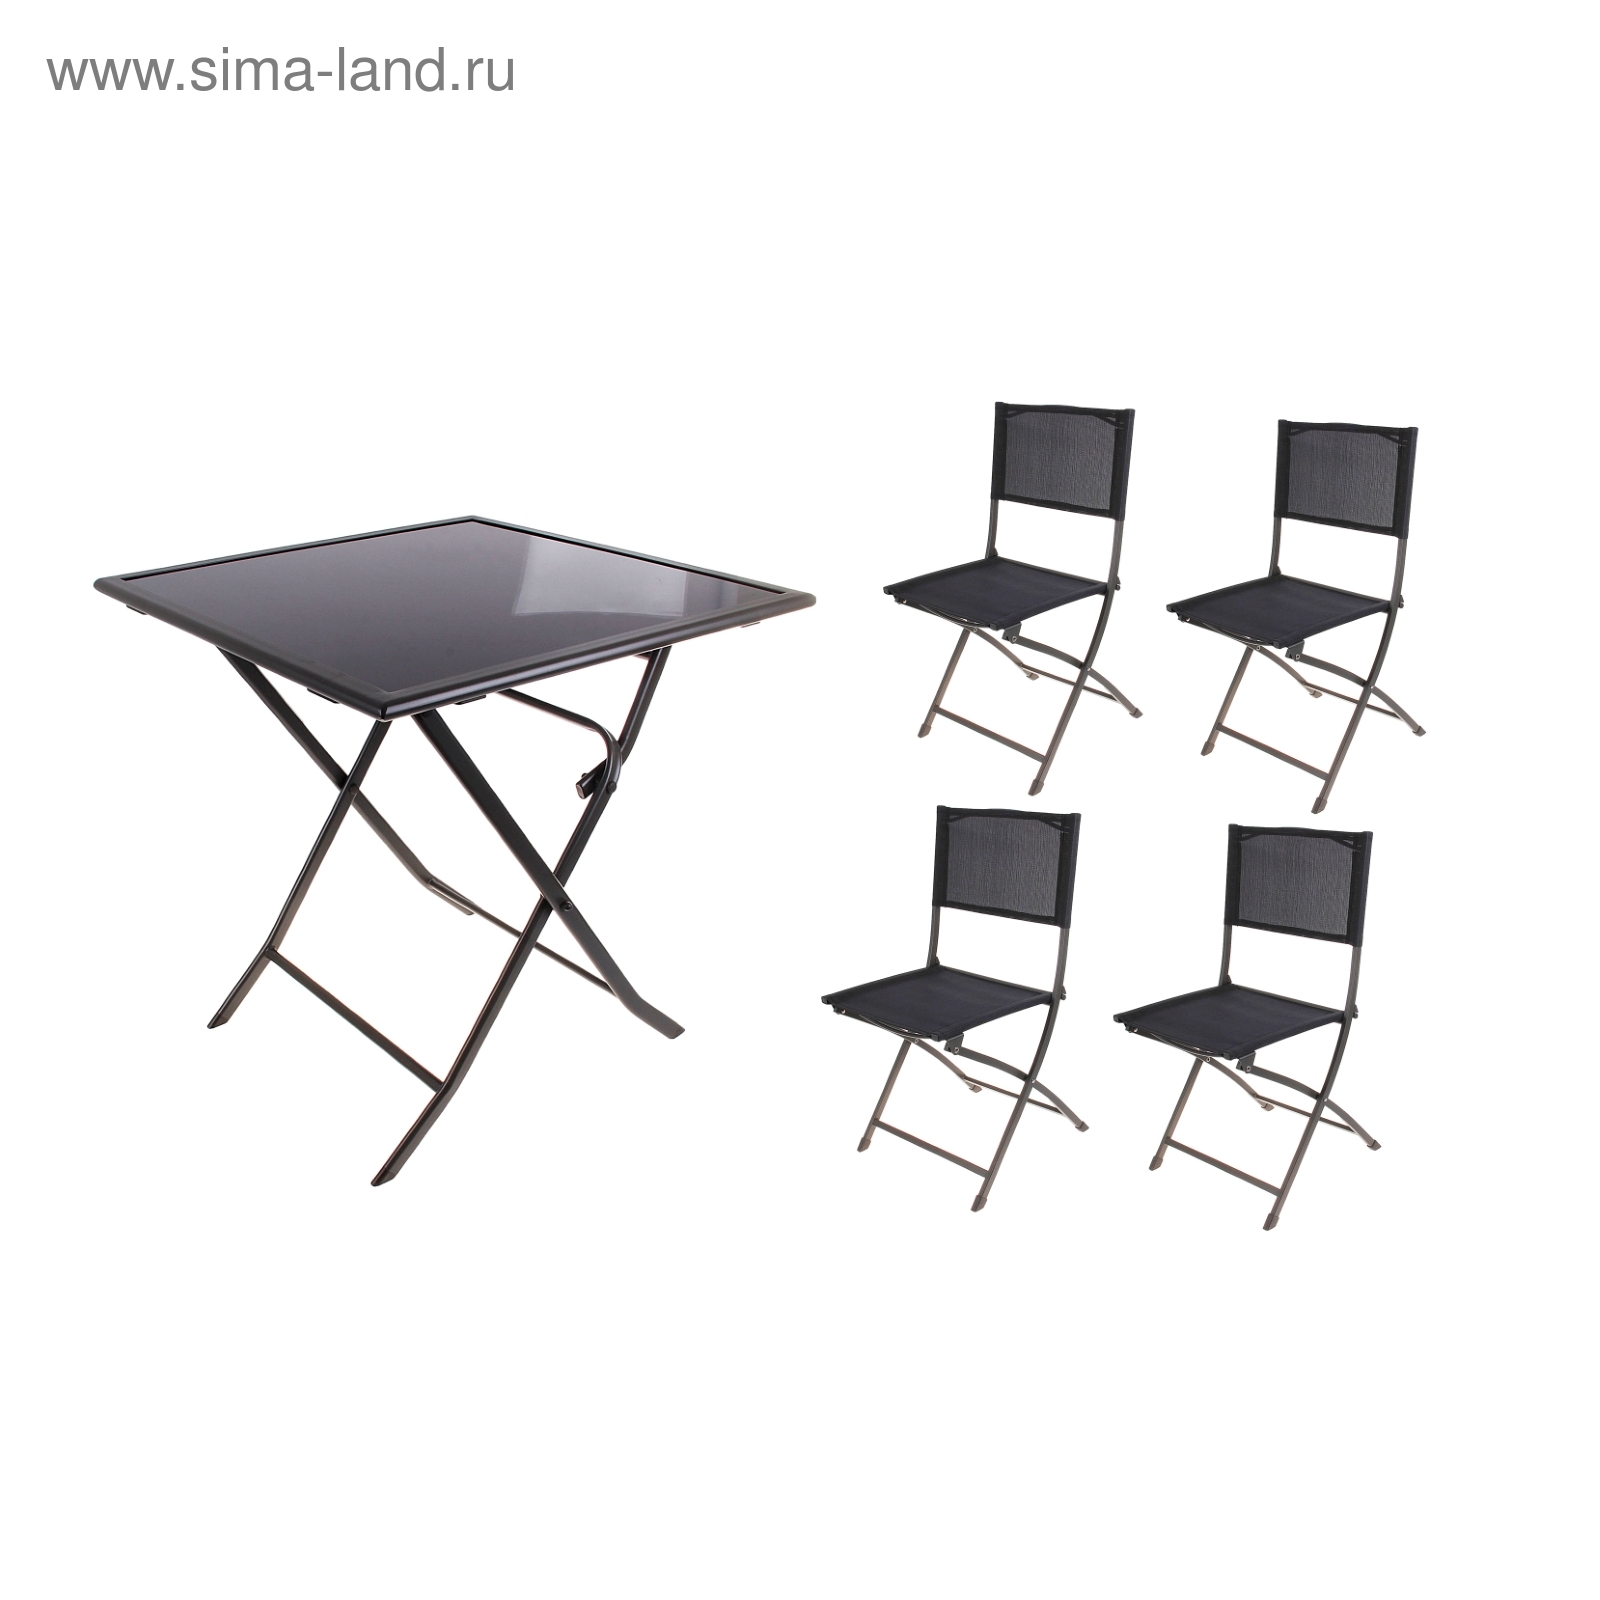 Набор: стол, размер 63 х 63 х 71 см, 4 стула до 80 кг, размер 56 х 45 х 80 см